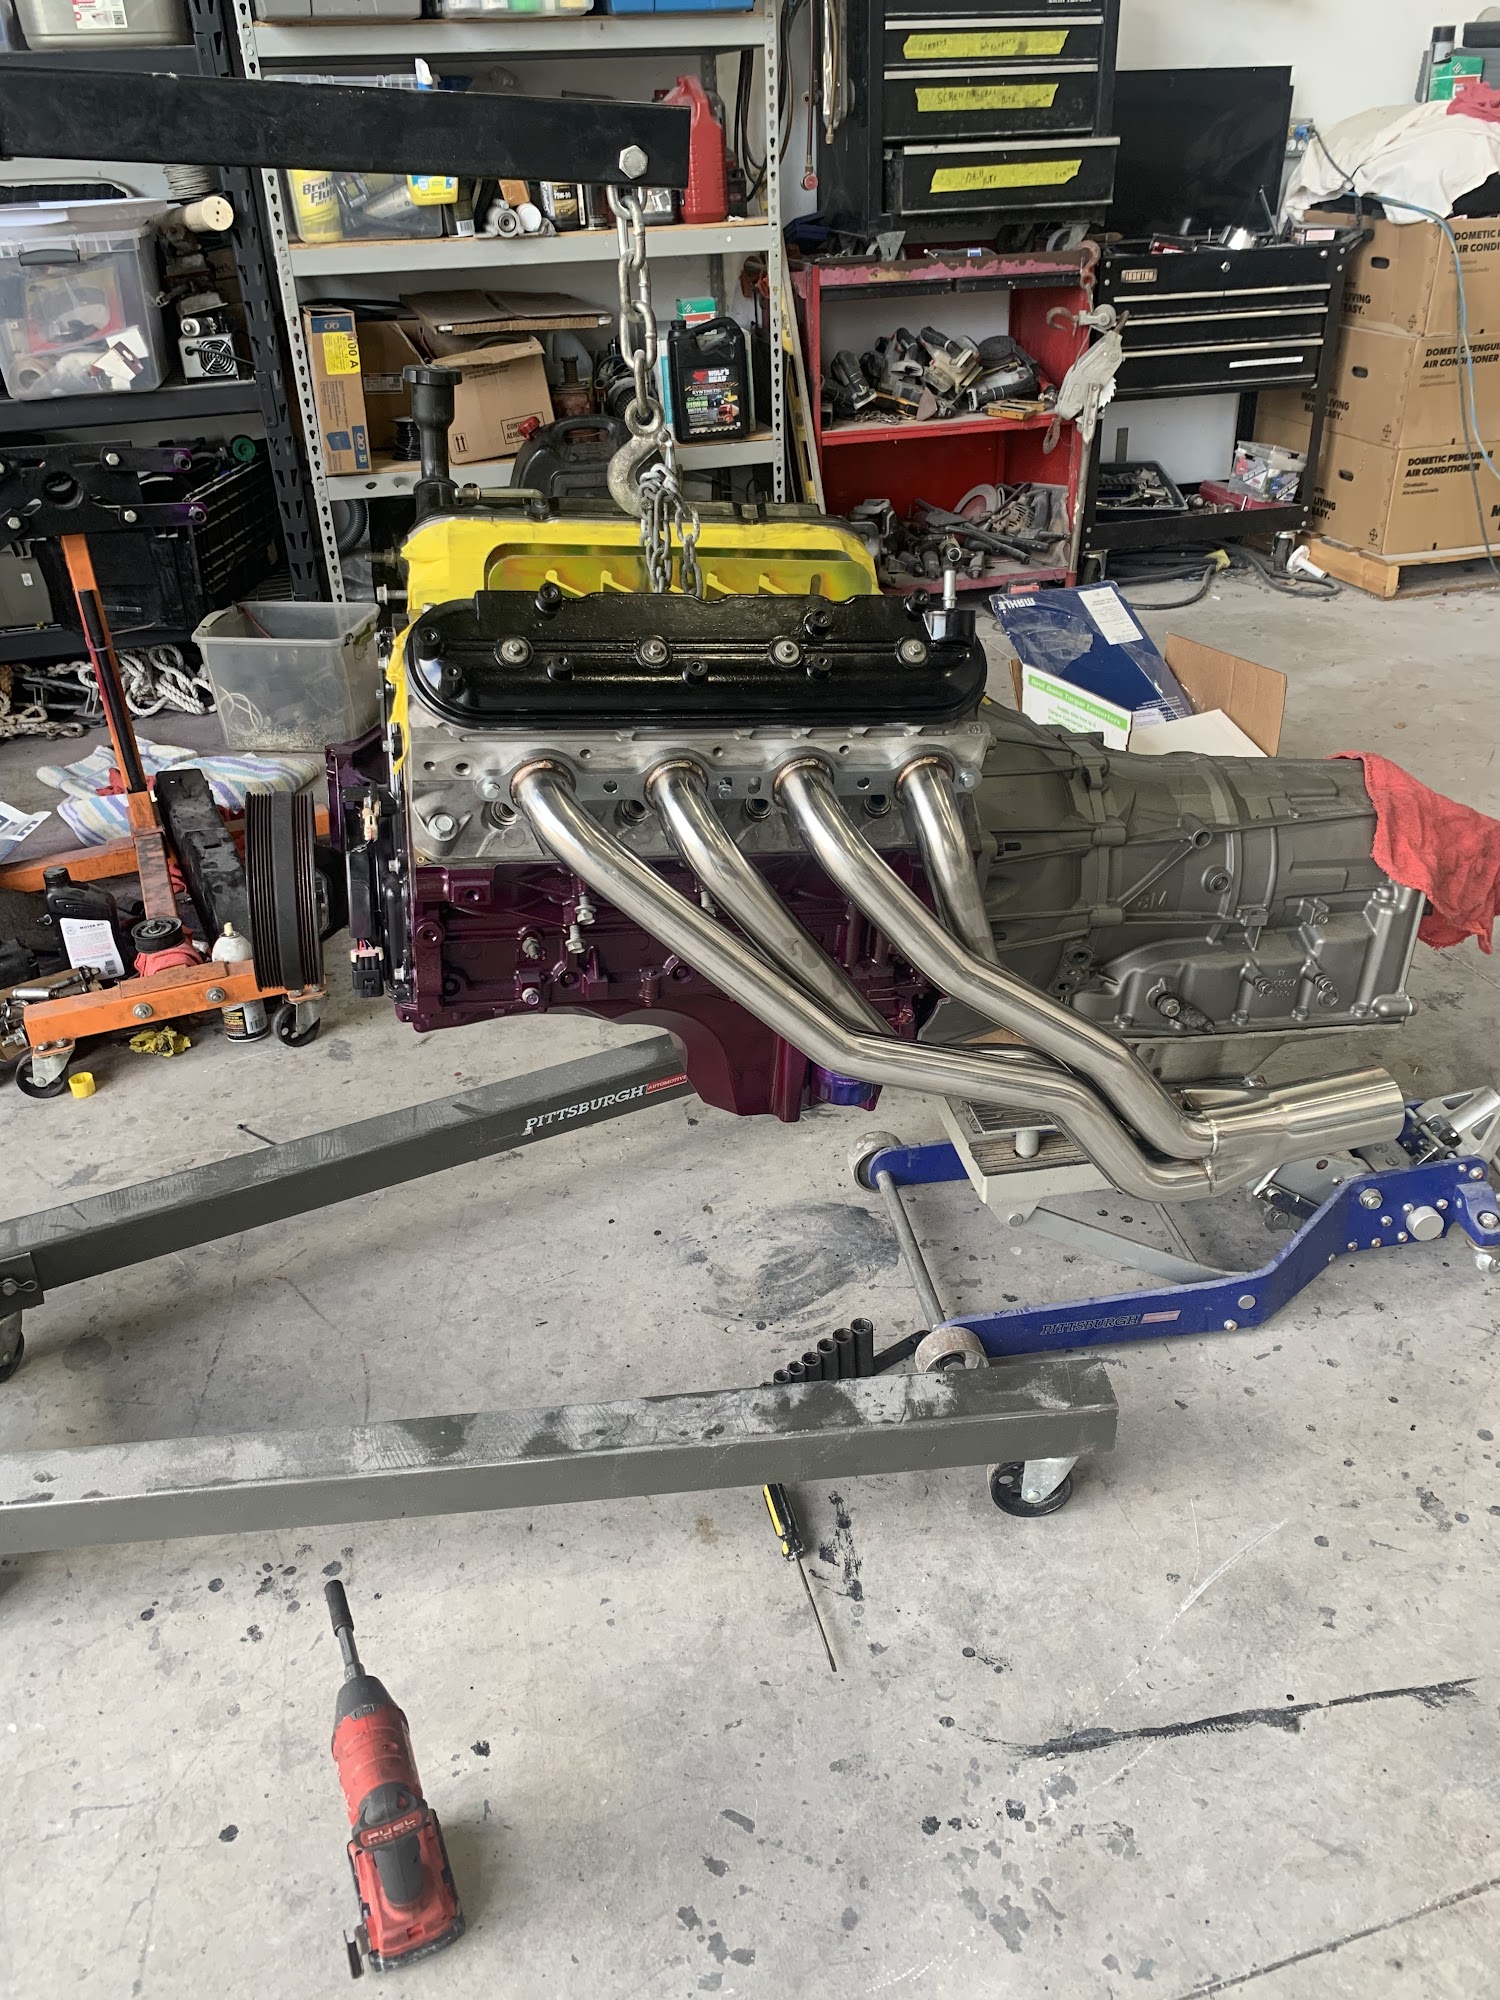 Brad’s rv chassis repair 3037 June Cir, LaBelle Florida 33935